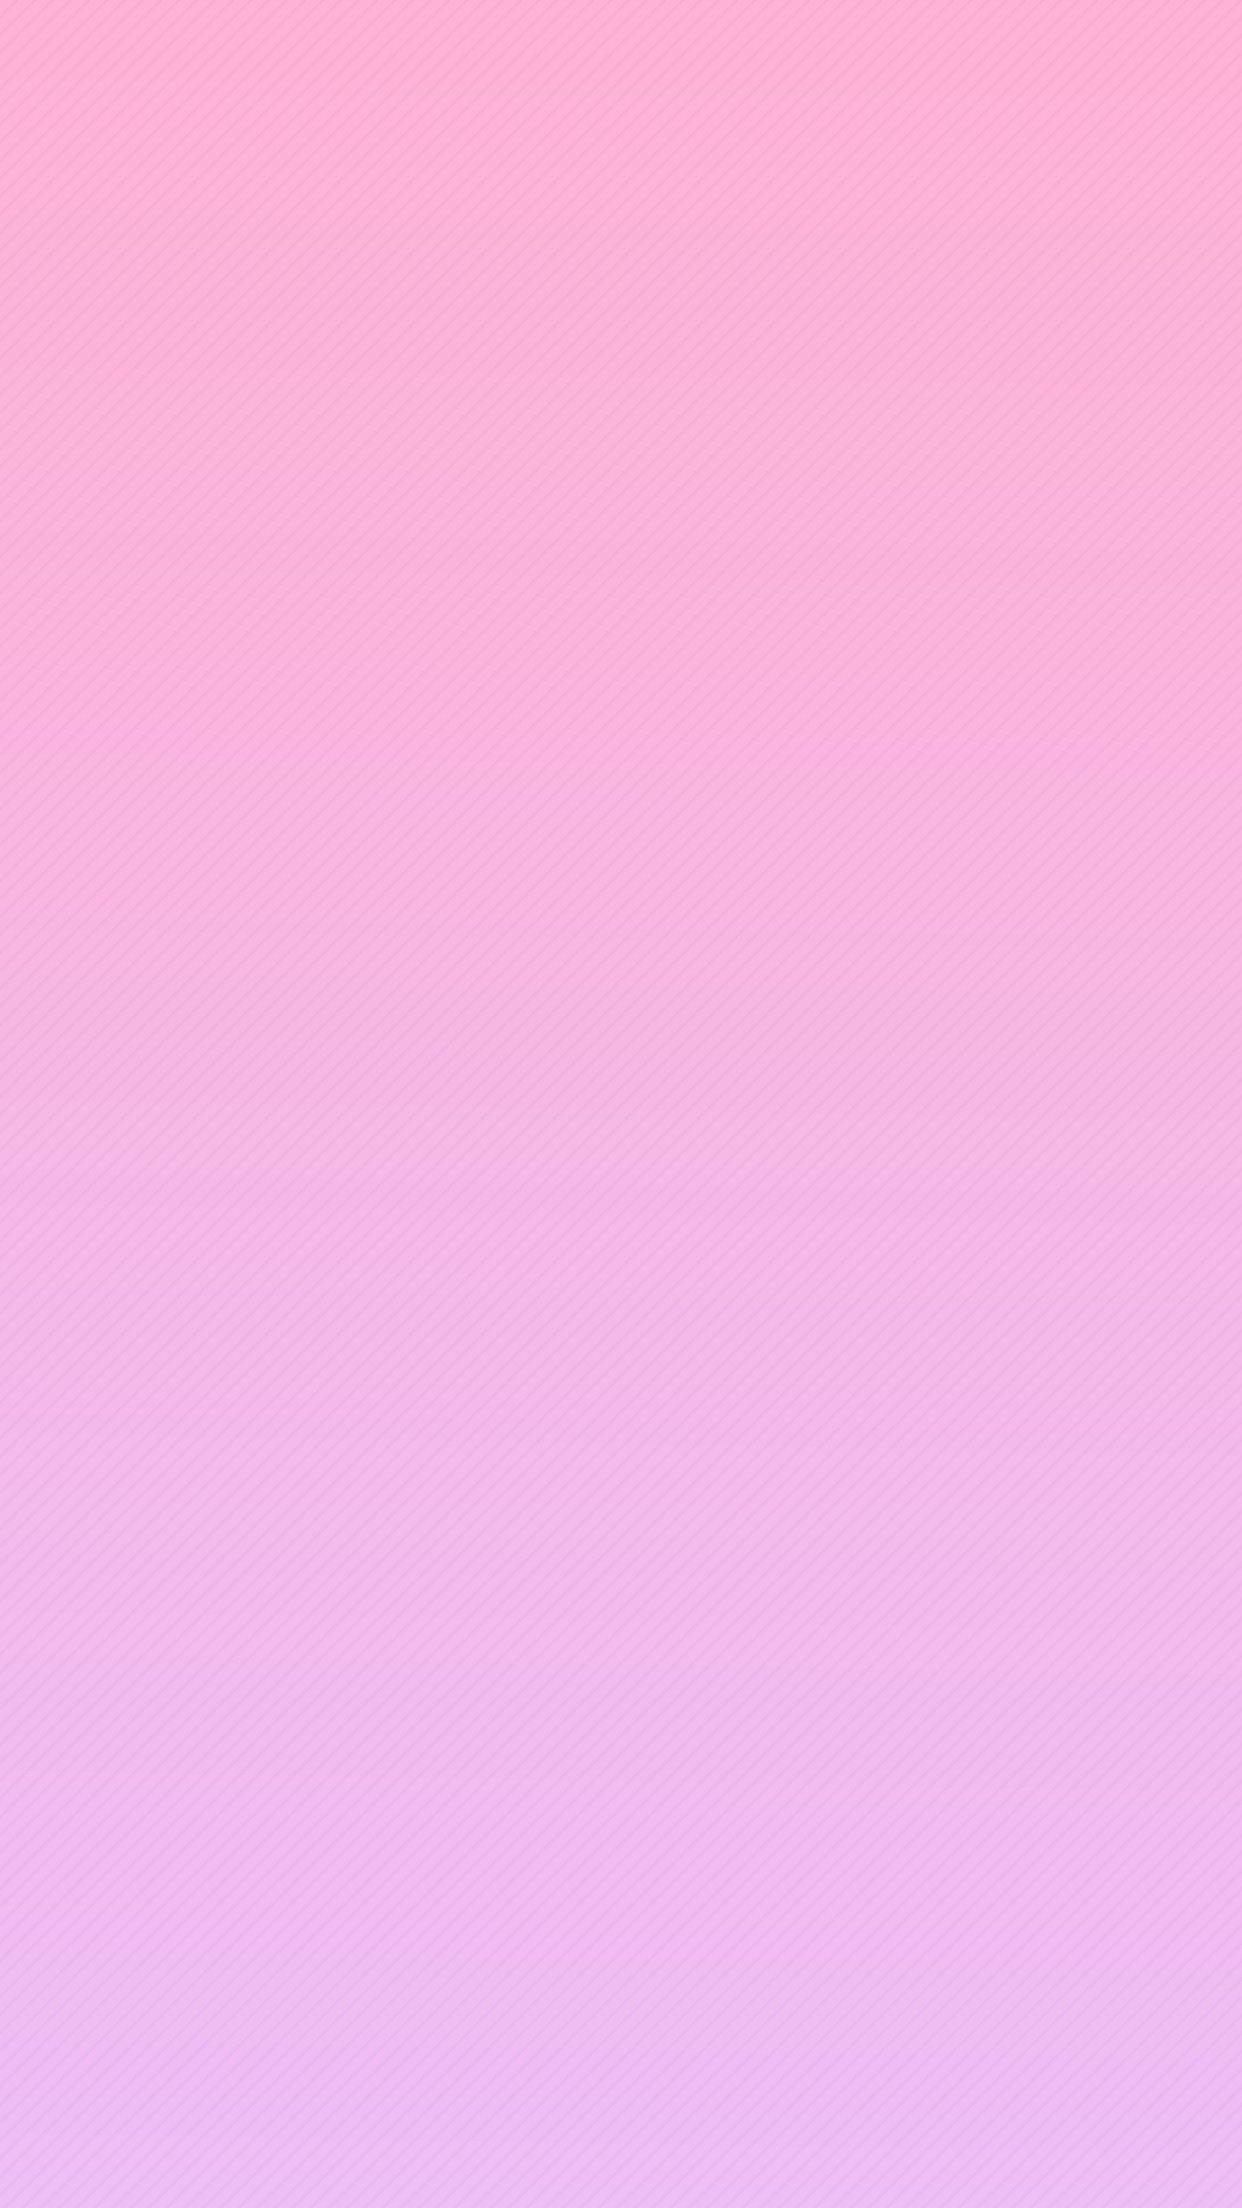 Pink Gradient iPhone Wallpapers - Top Free Pink Gradient iPhone ...